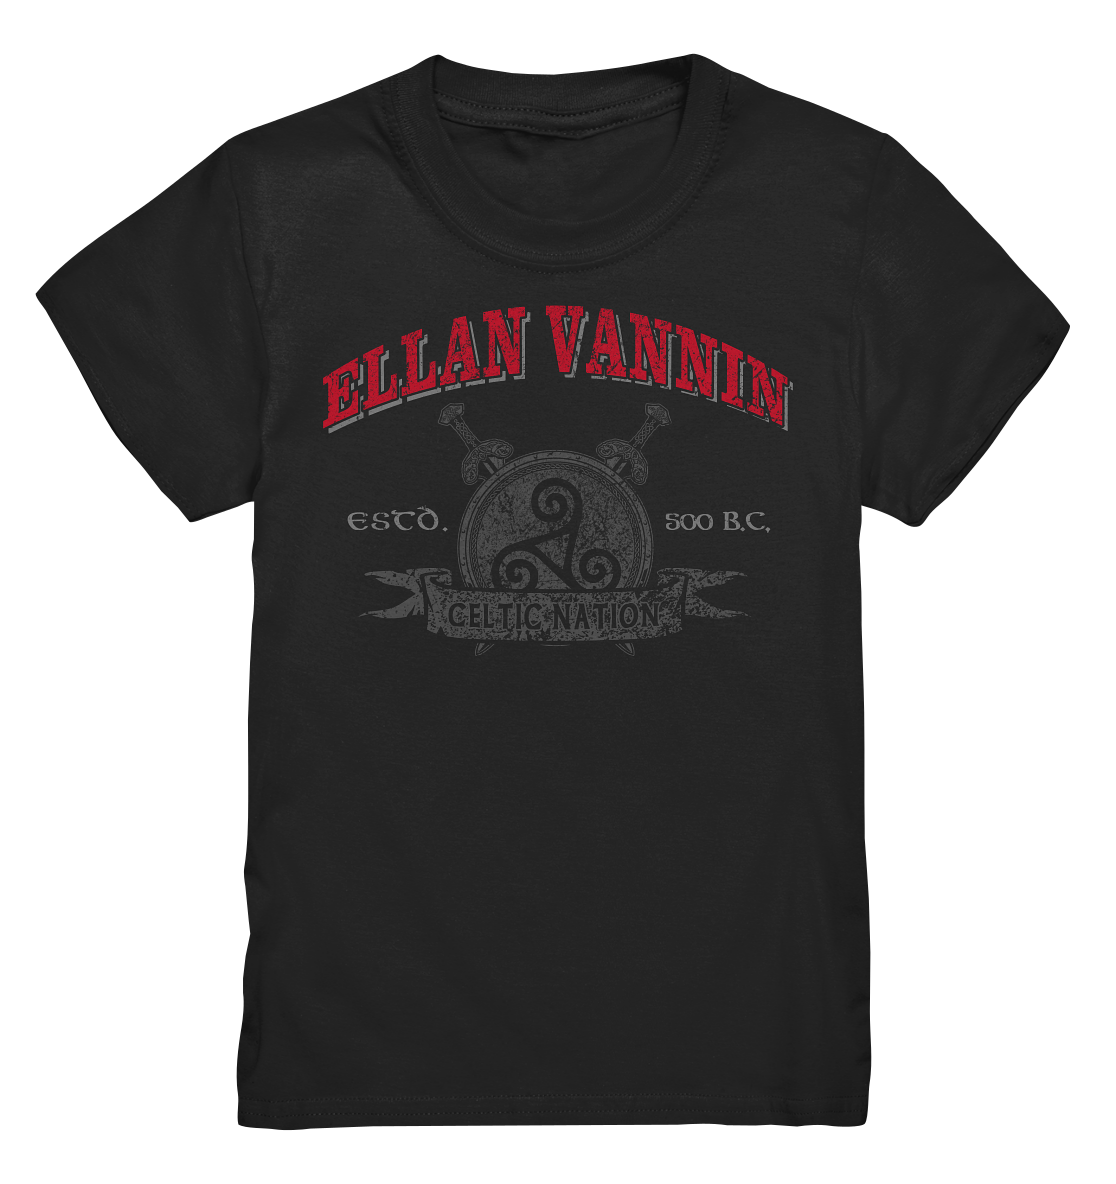 Ellan Vannin "Celtic Nation" - Kids Premium Shirt